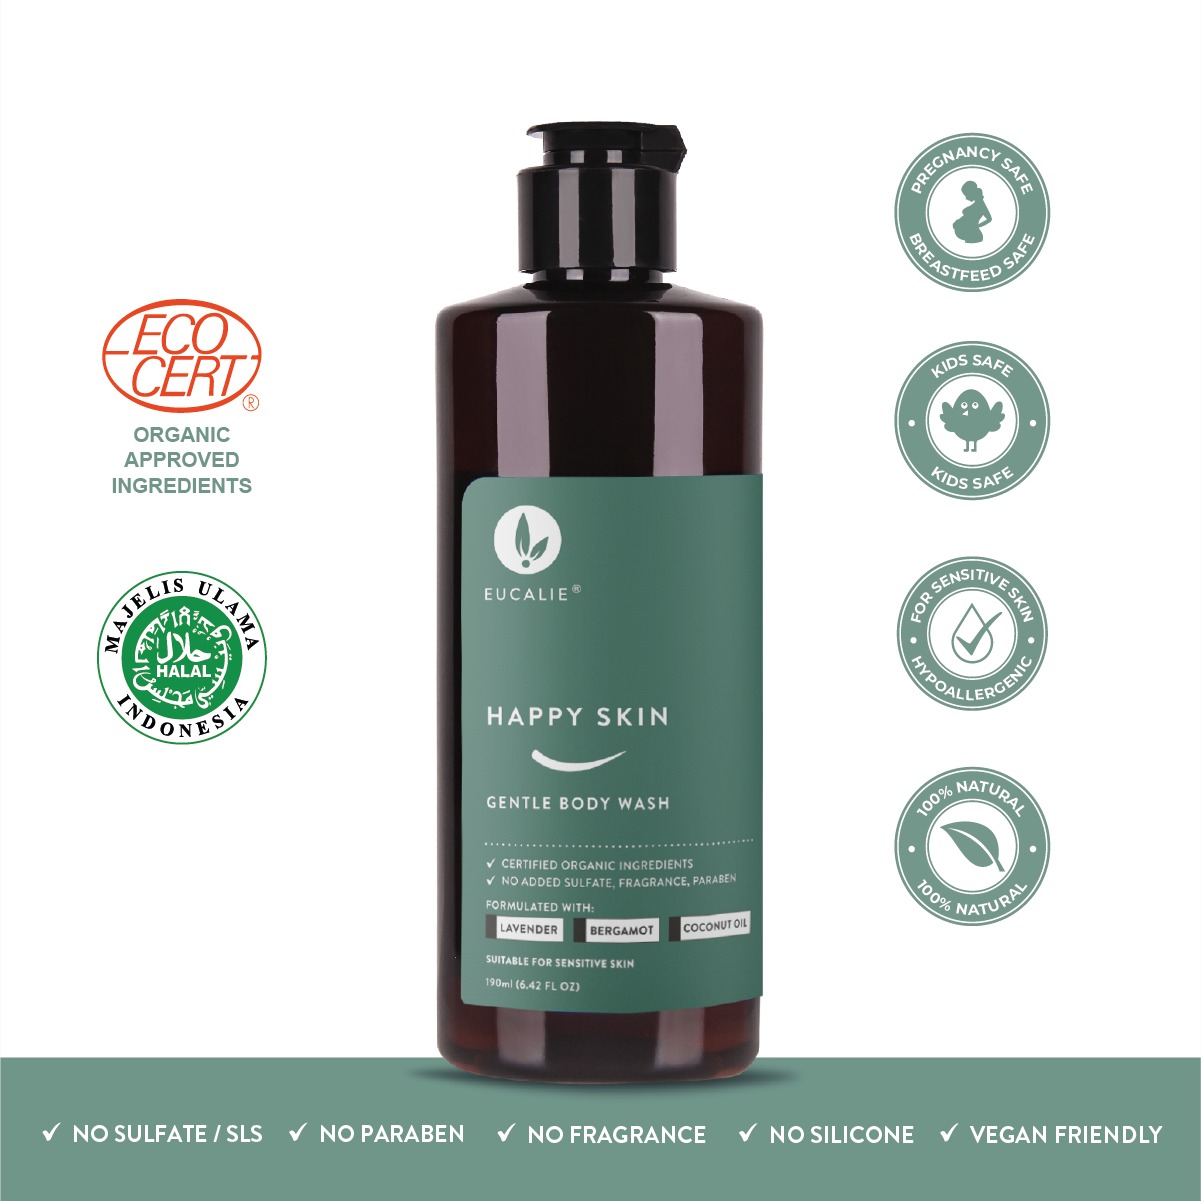 Eucalie Organics Eucalie Organic Gentle Body Wash - Happy Skin